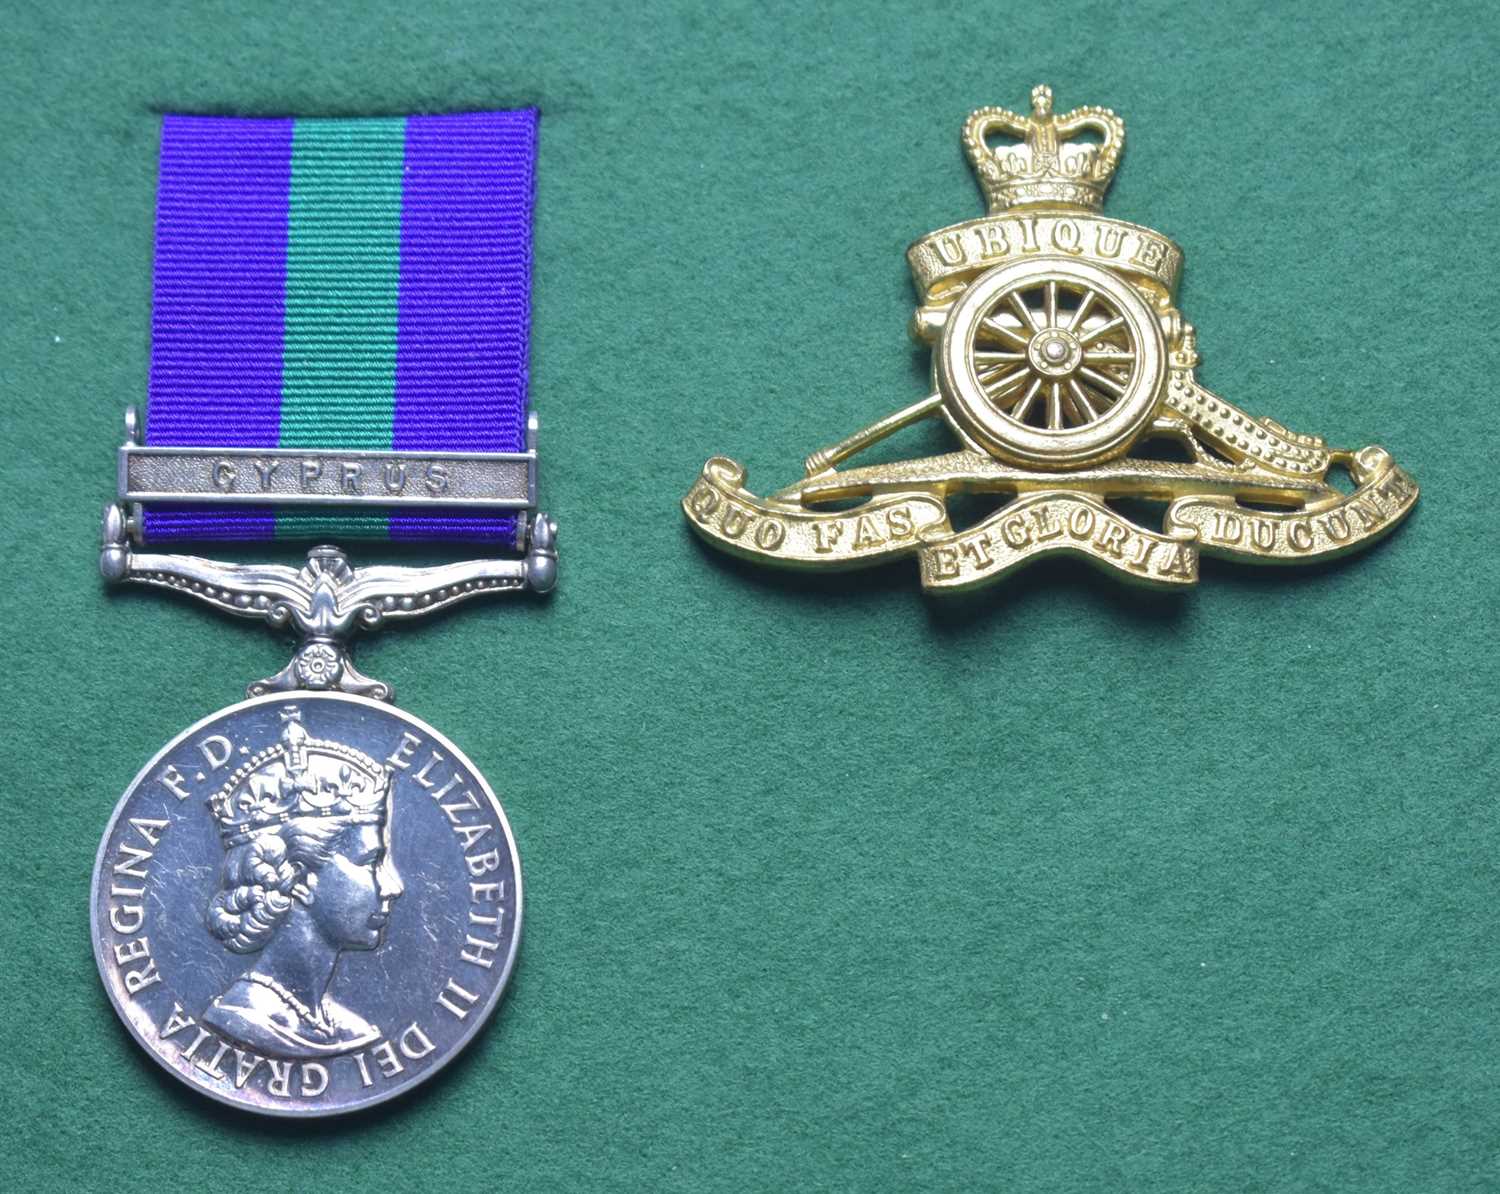 Lot 281 - Campaign Service Medal